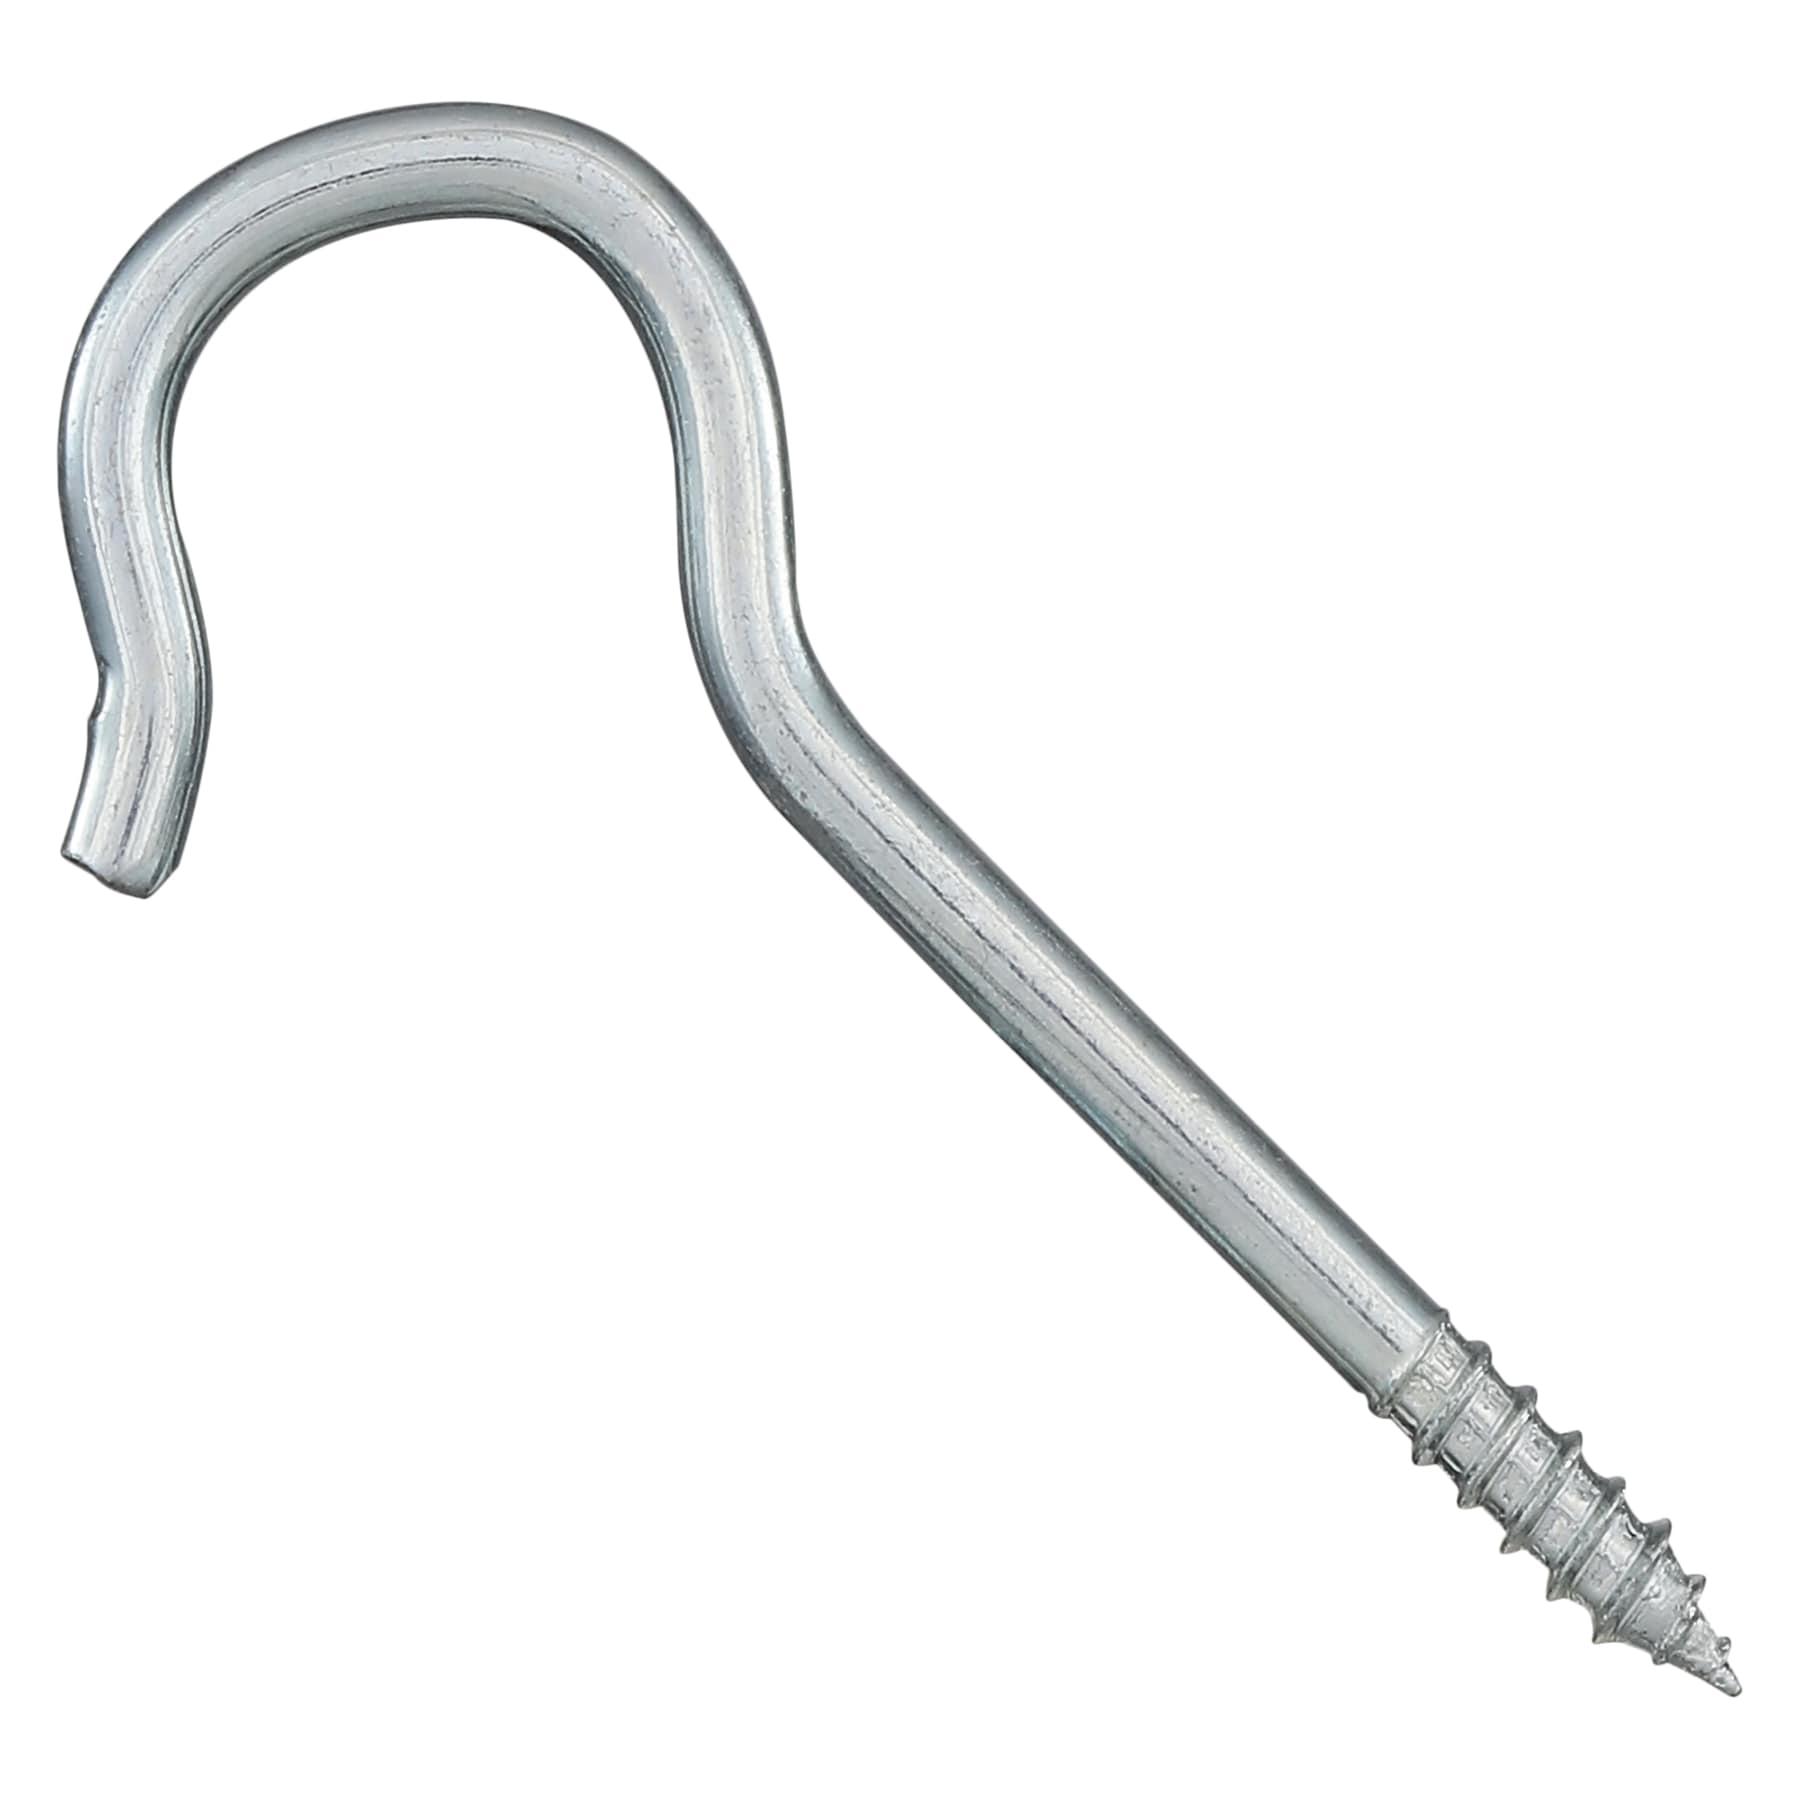 #6 Zinc-Plated Screw Hook